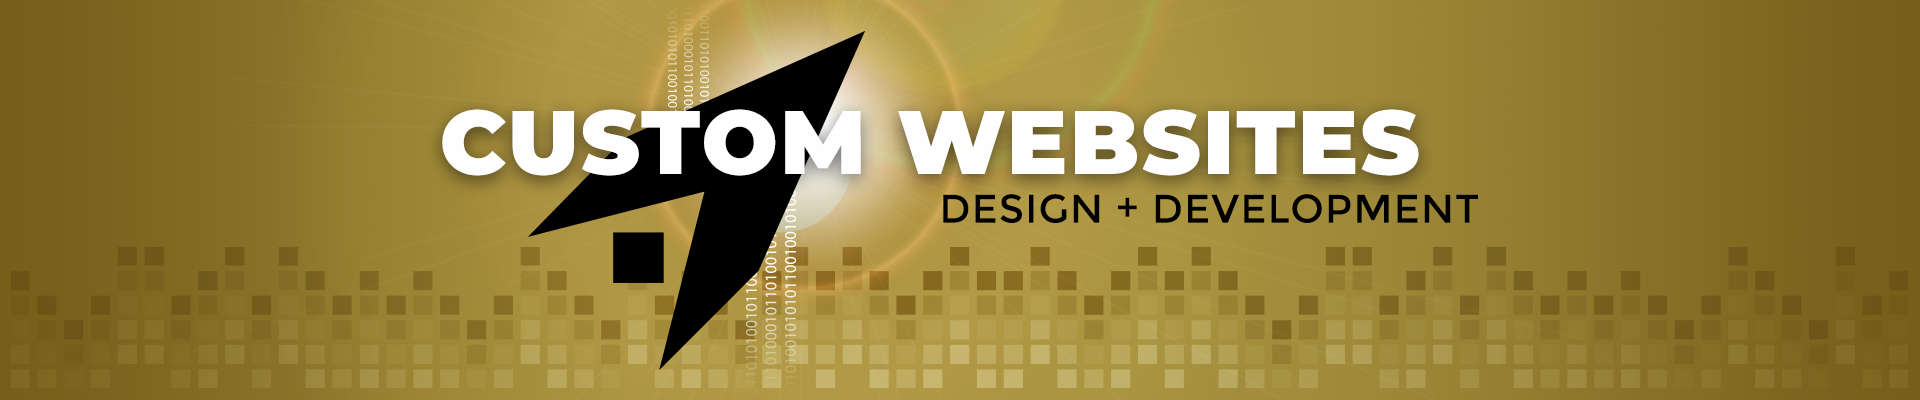 Custom Website Design + Development